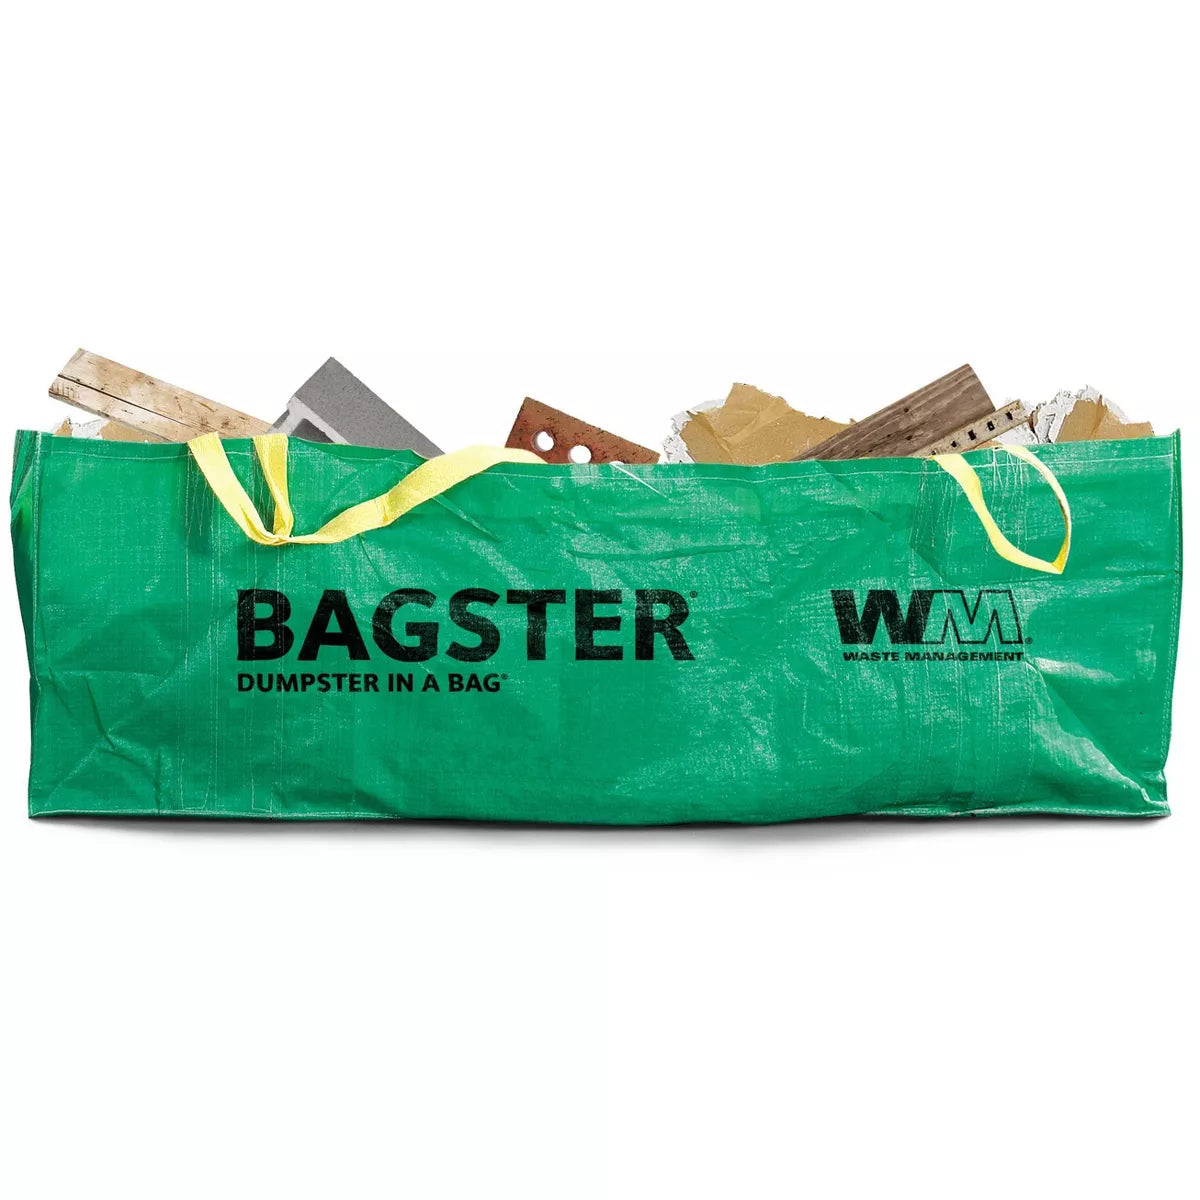 Waste Management Bagster Dumpster in a Bag Green